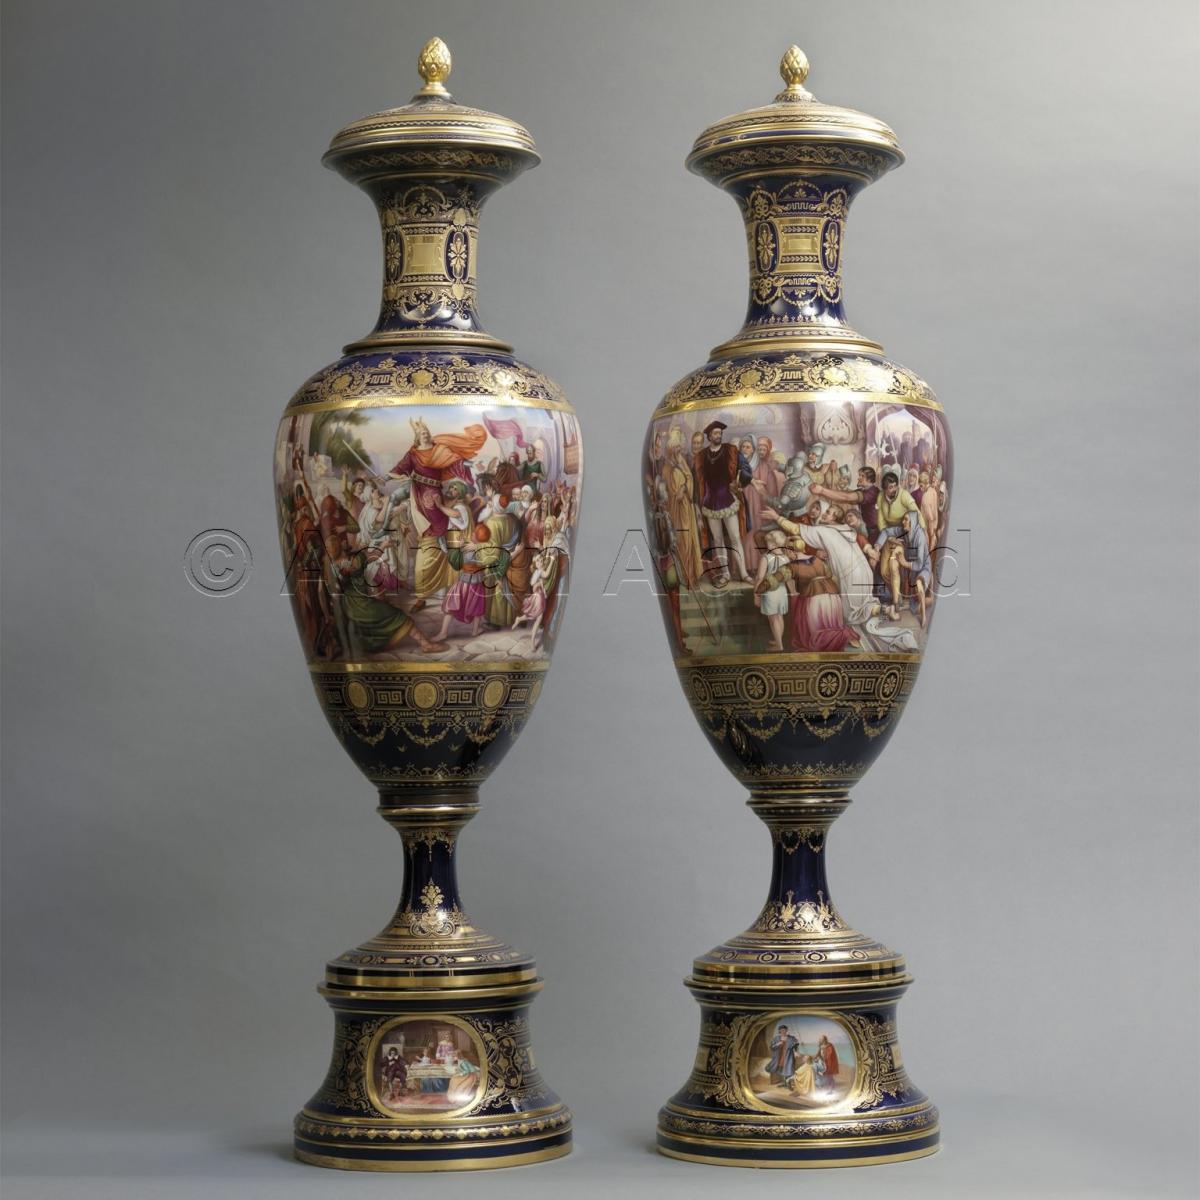 Pair of Vienna Vases ©AdrianAlanLtd